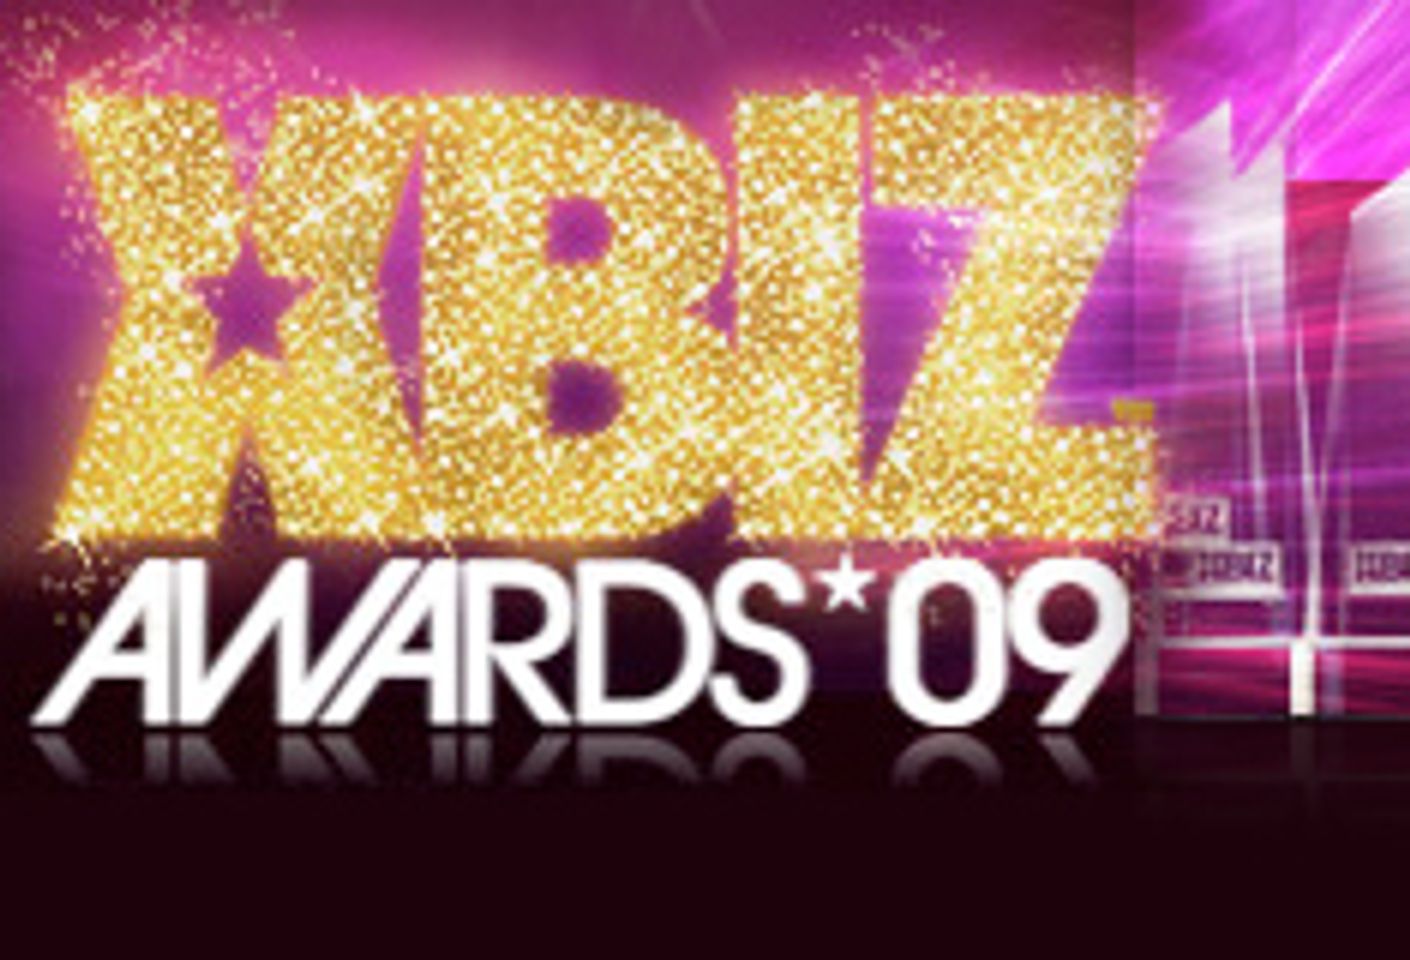 XBIZ Announces 2009 Awards Nominees